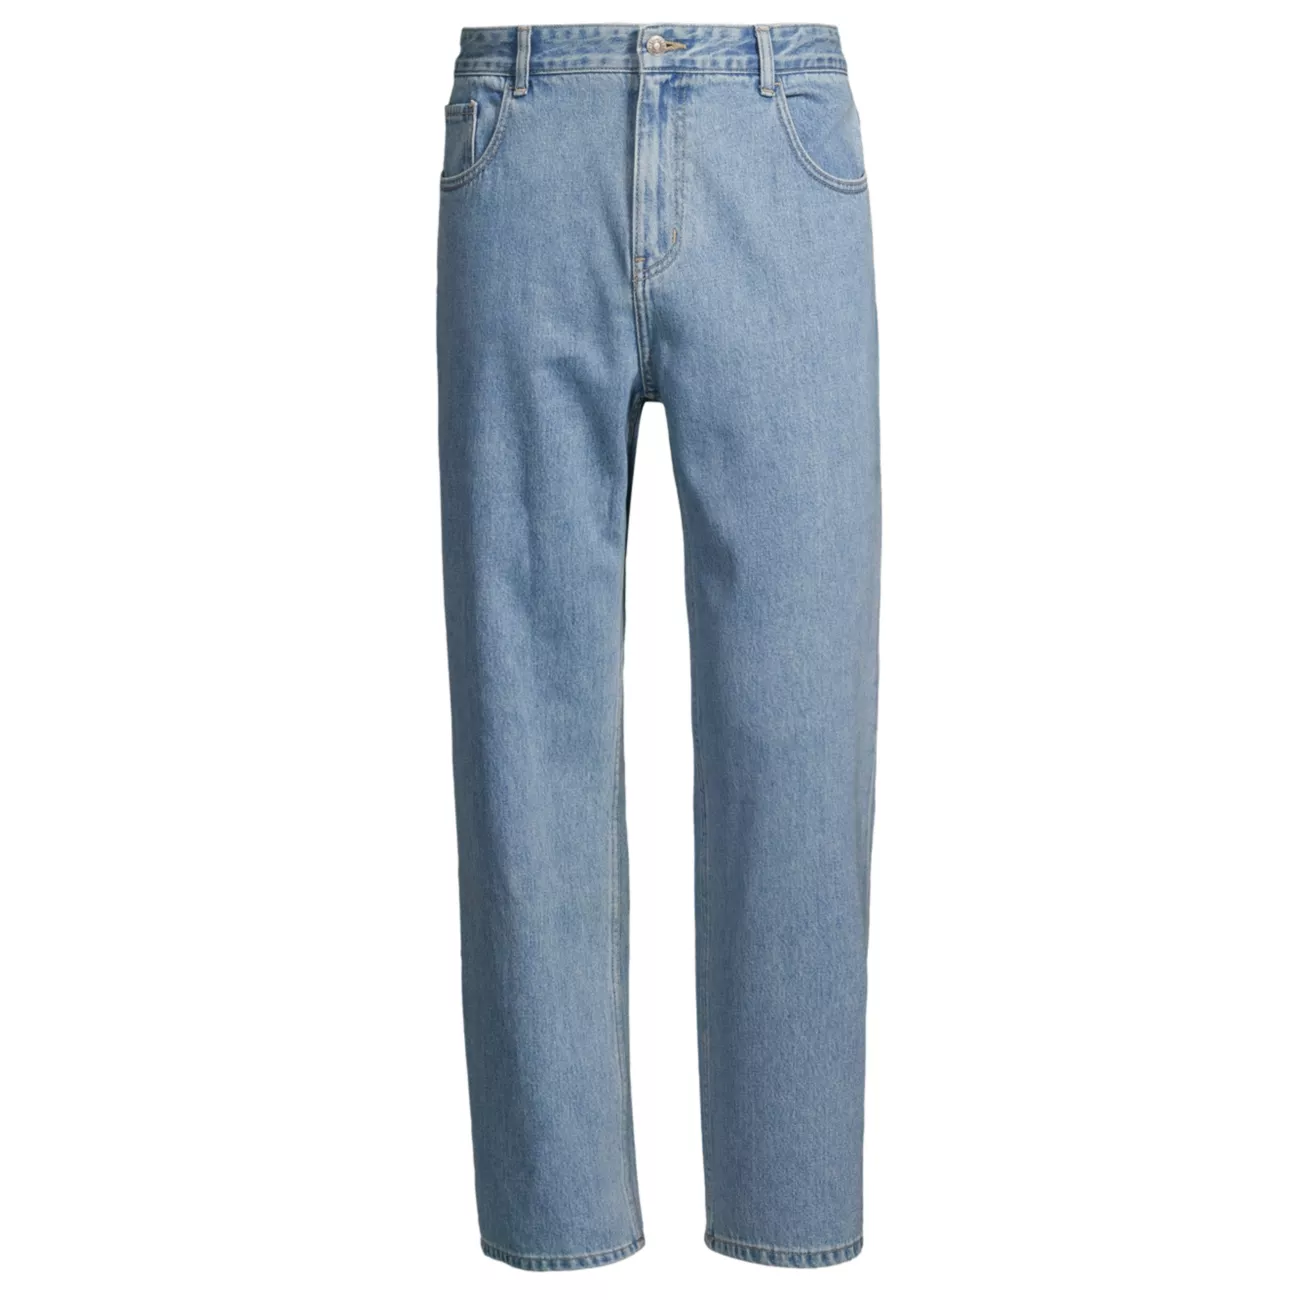 Прямые джинсы с пятью карманами Wardrobe In The City Le17Septembre